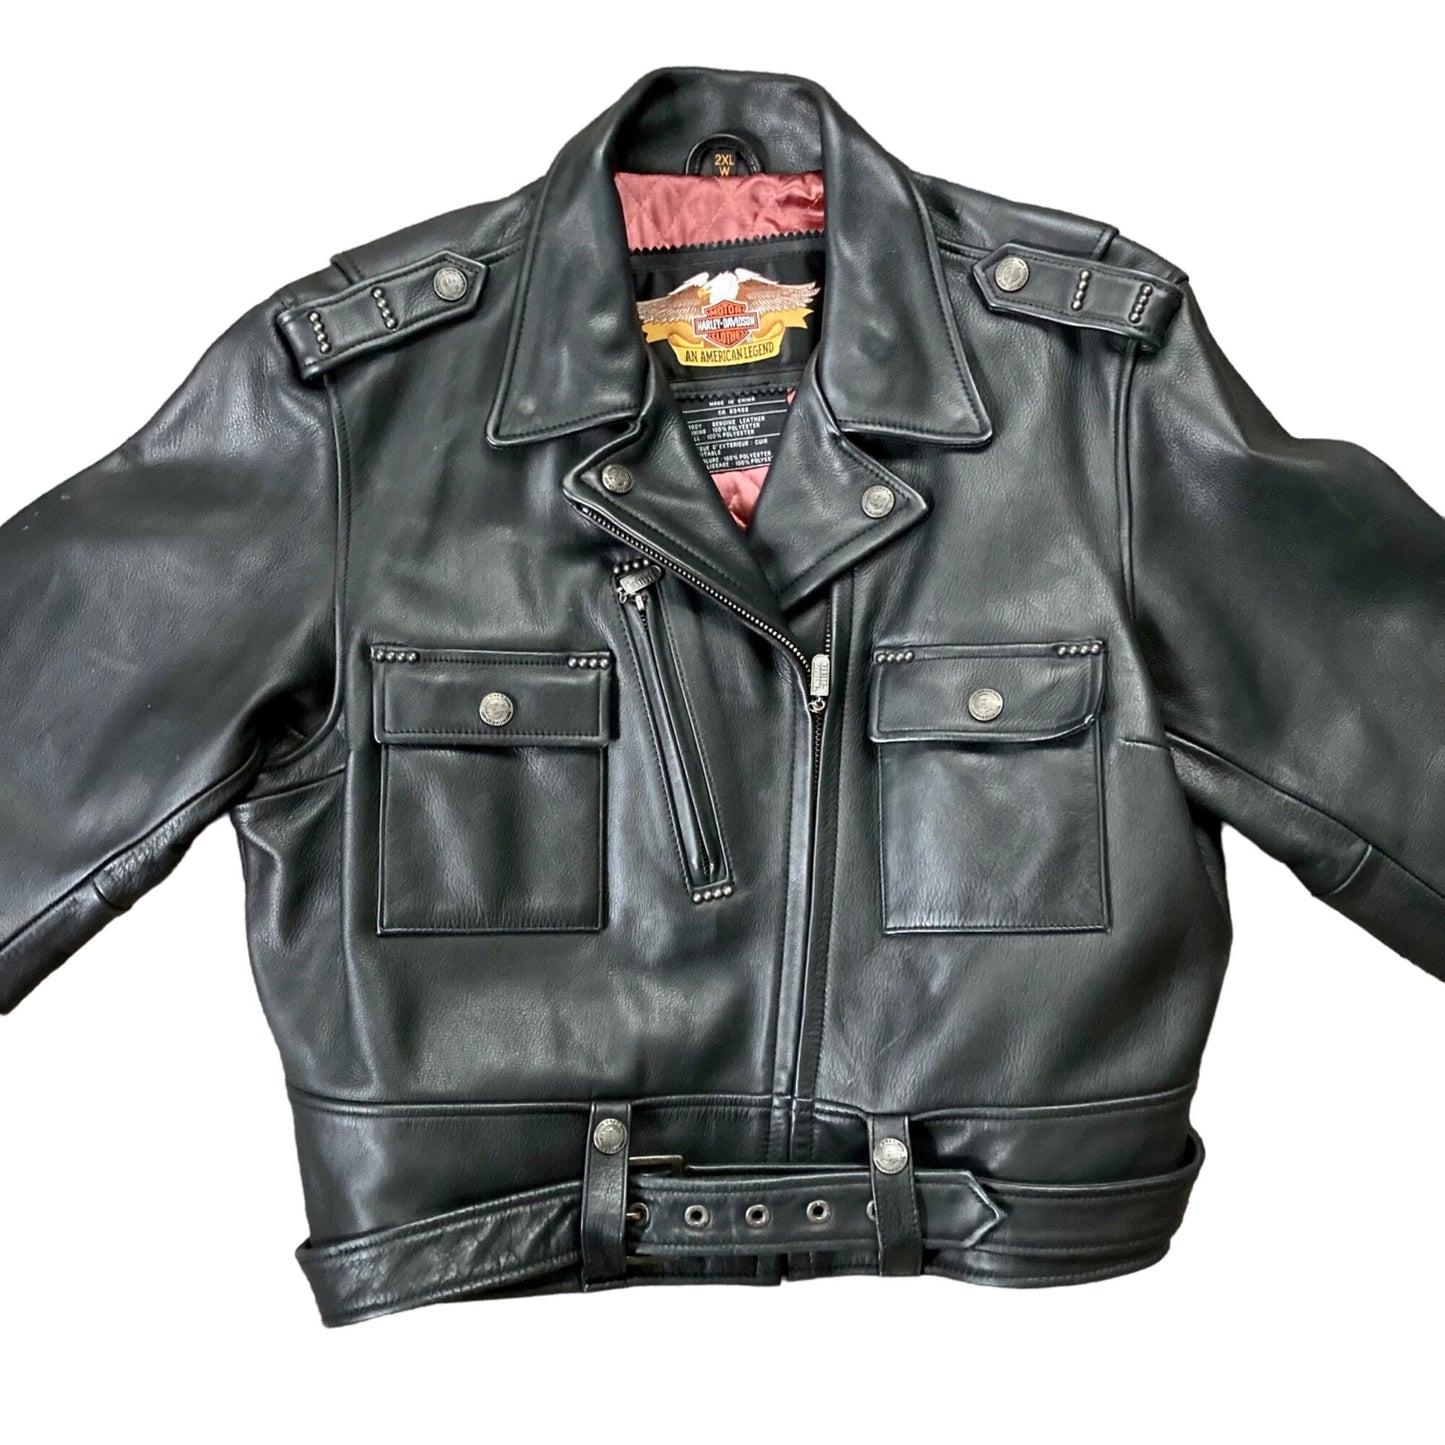 Harley Davidson Women's Leather Motorcycle Jacket Size 2XL Black CA-03402 NICE!